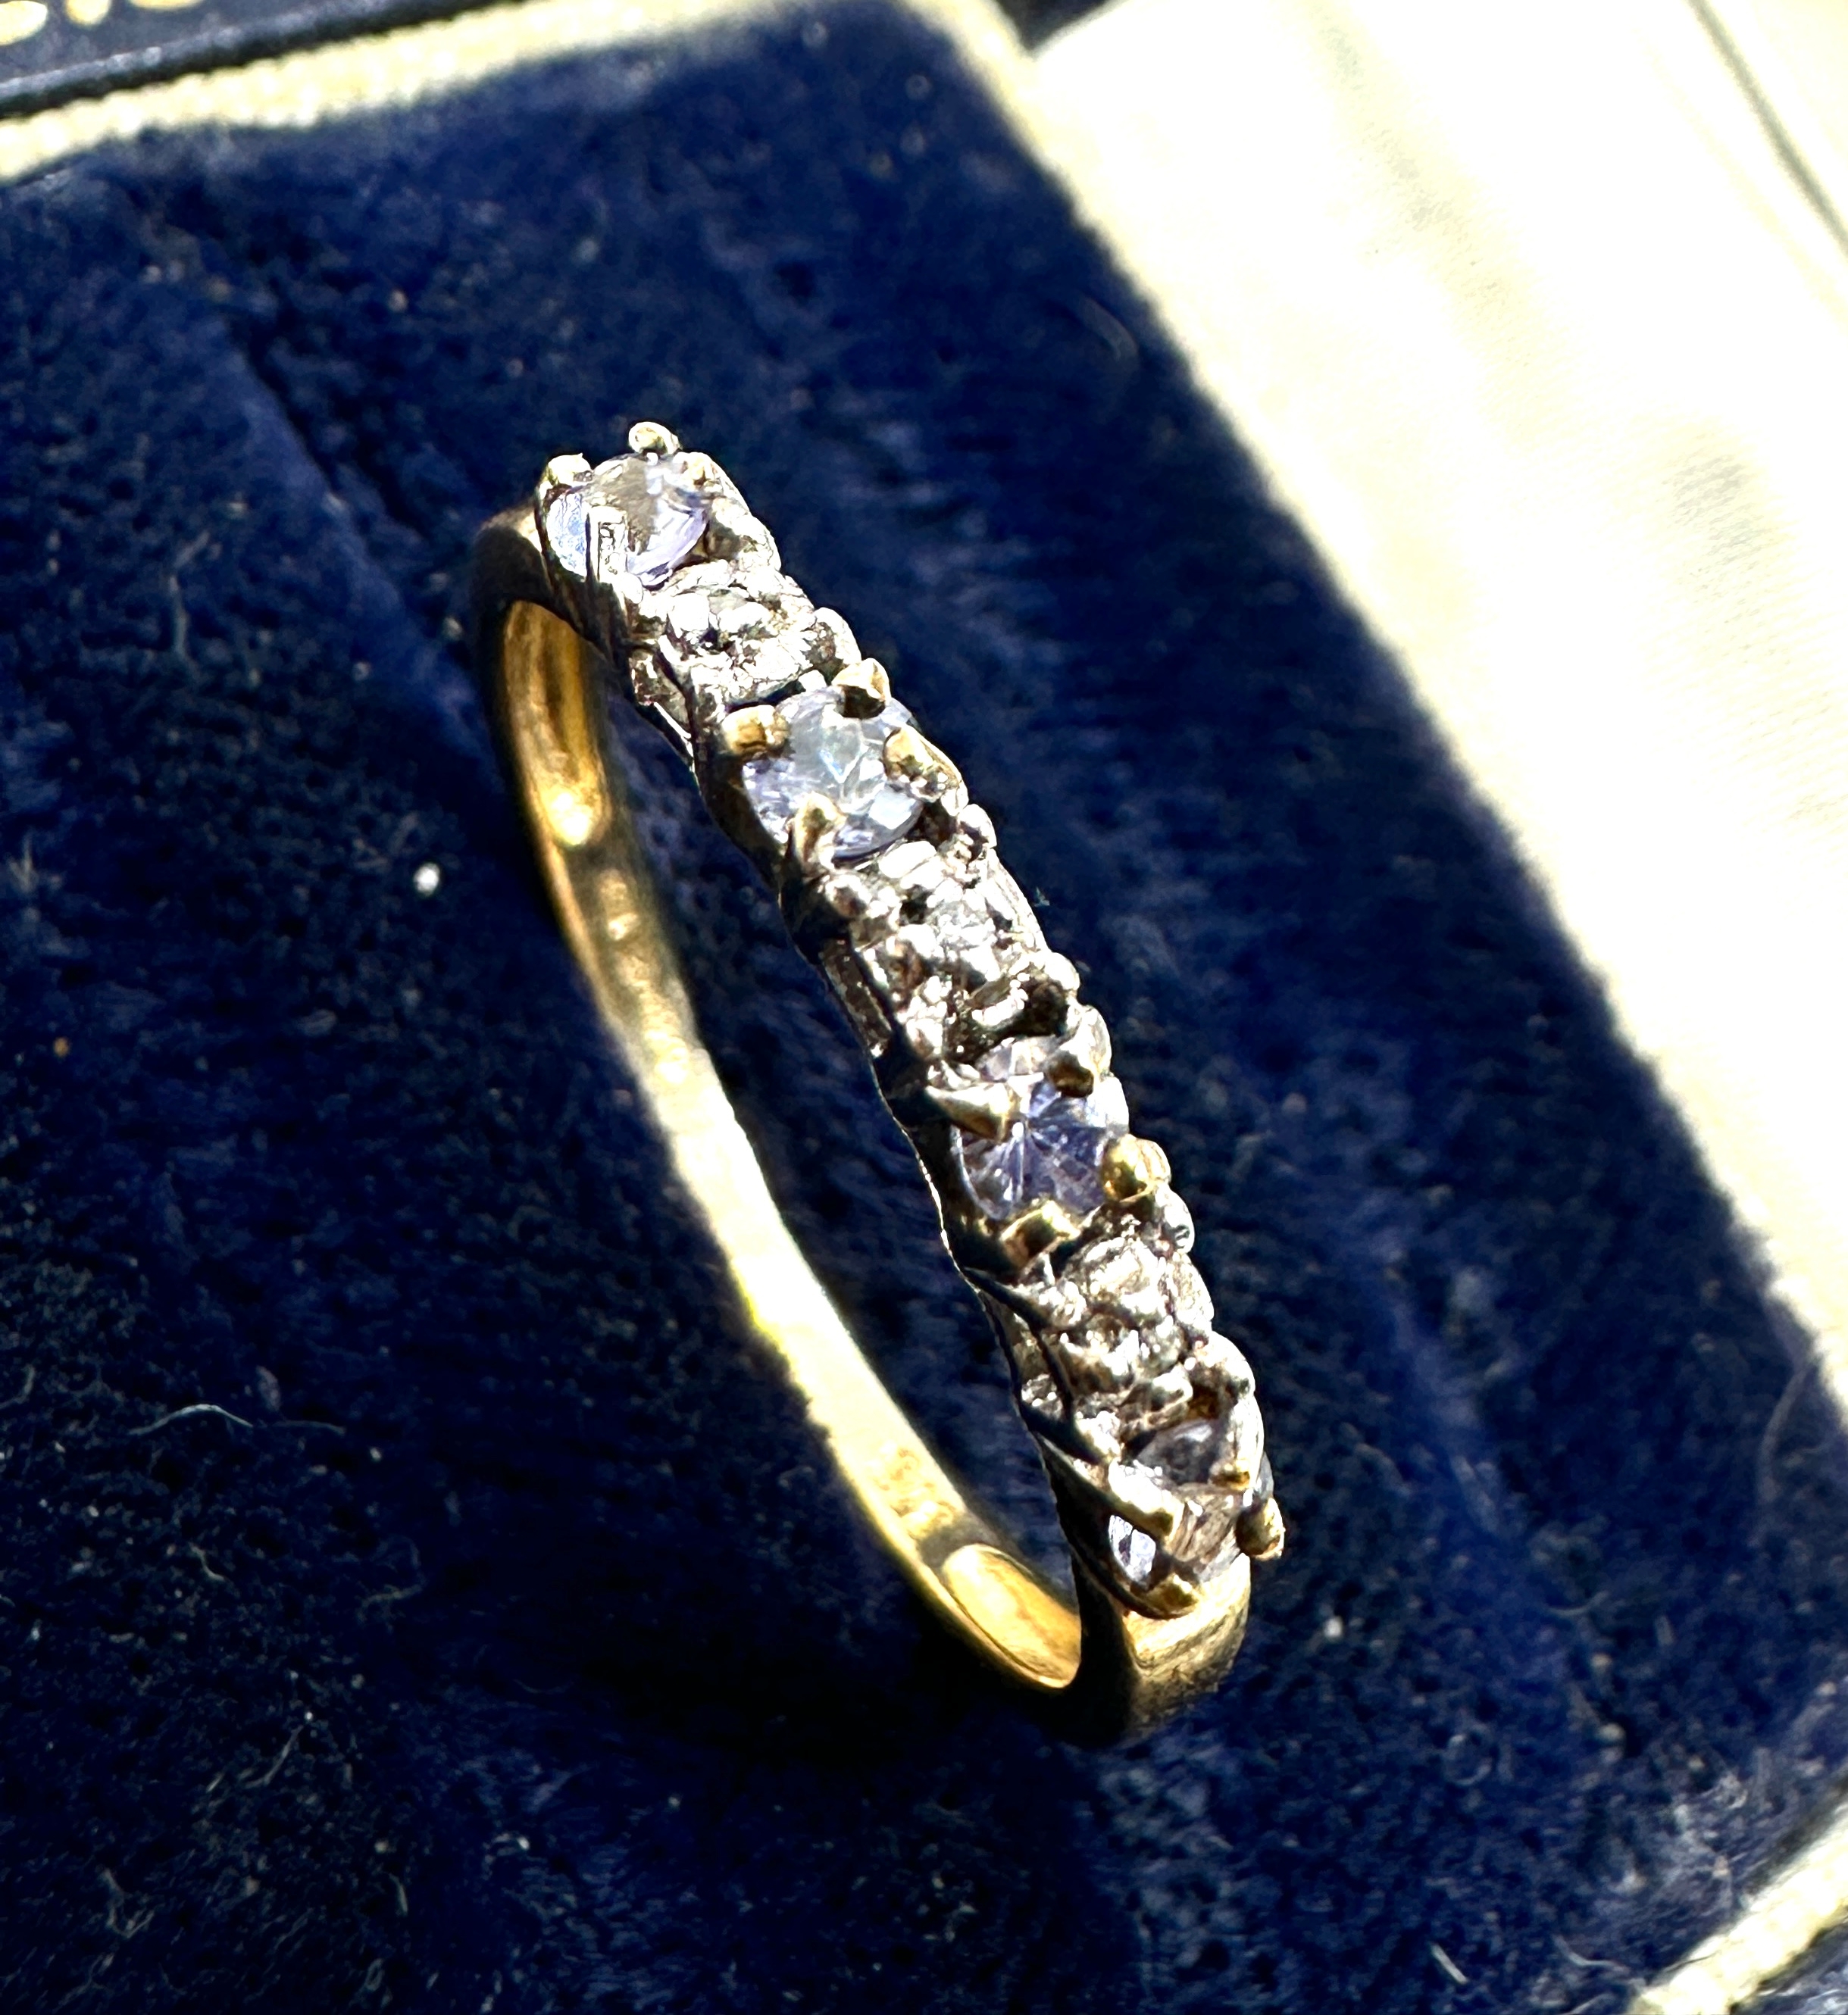 9ct gold tanzanite & diamond ring weight 1.5g - Image 3 of 4